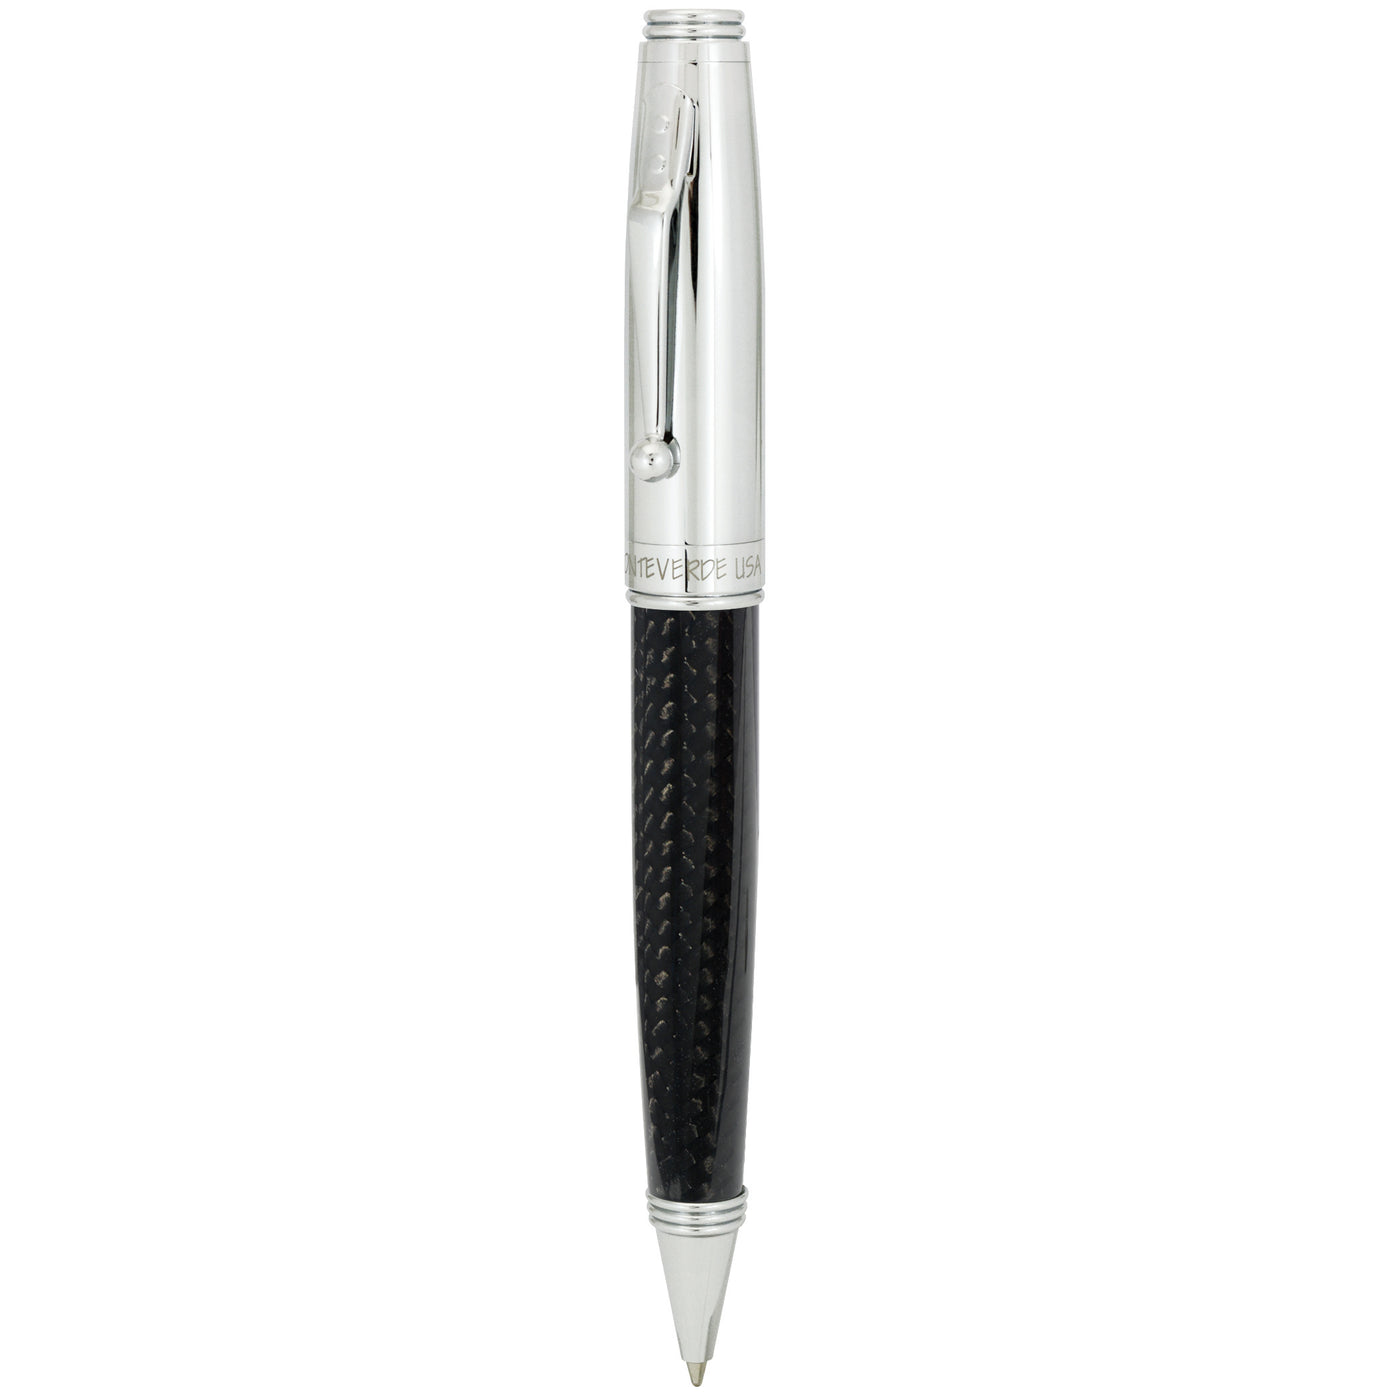 Monteverde Invincia Chrome Carbon Fiber Ballpoint Pen